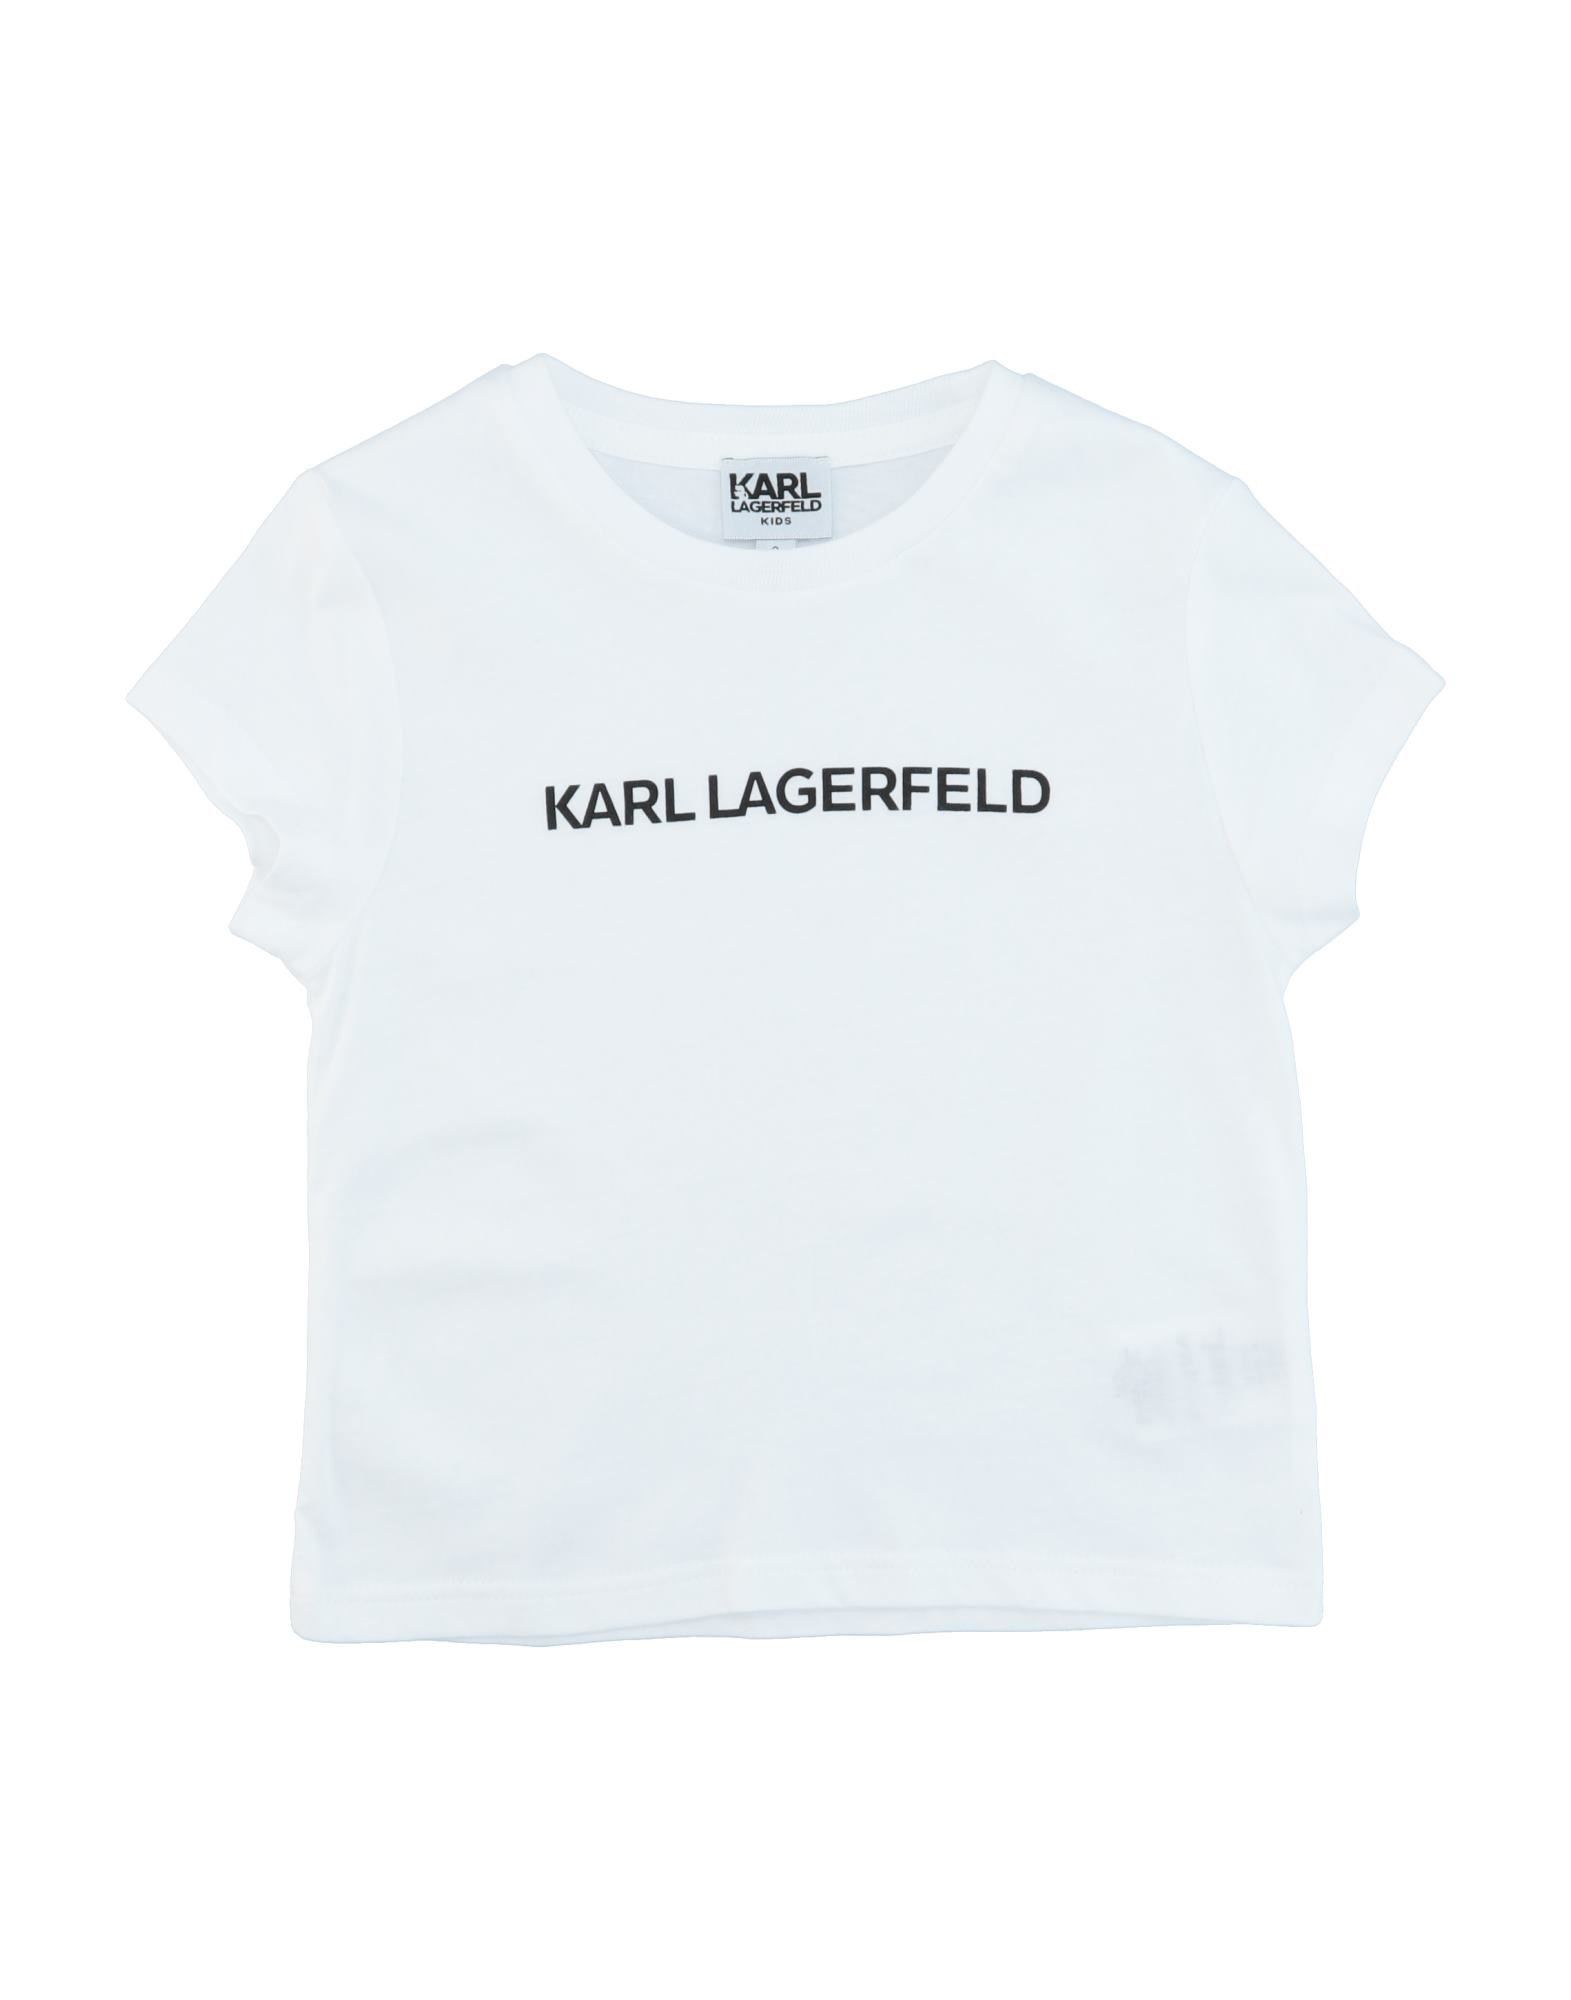 KARL LAGERFELD KARL LAGERFELD TODDLER GIRL T-SHIRT WHITE SIZE 4 COTTON,12453760AJ 2